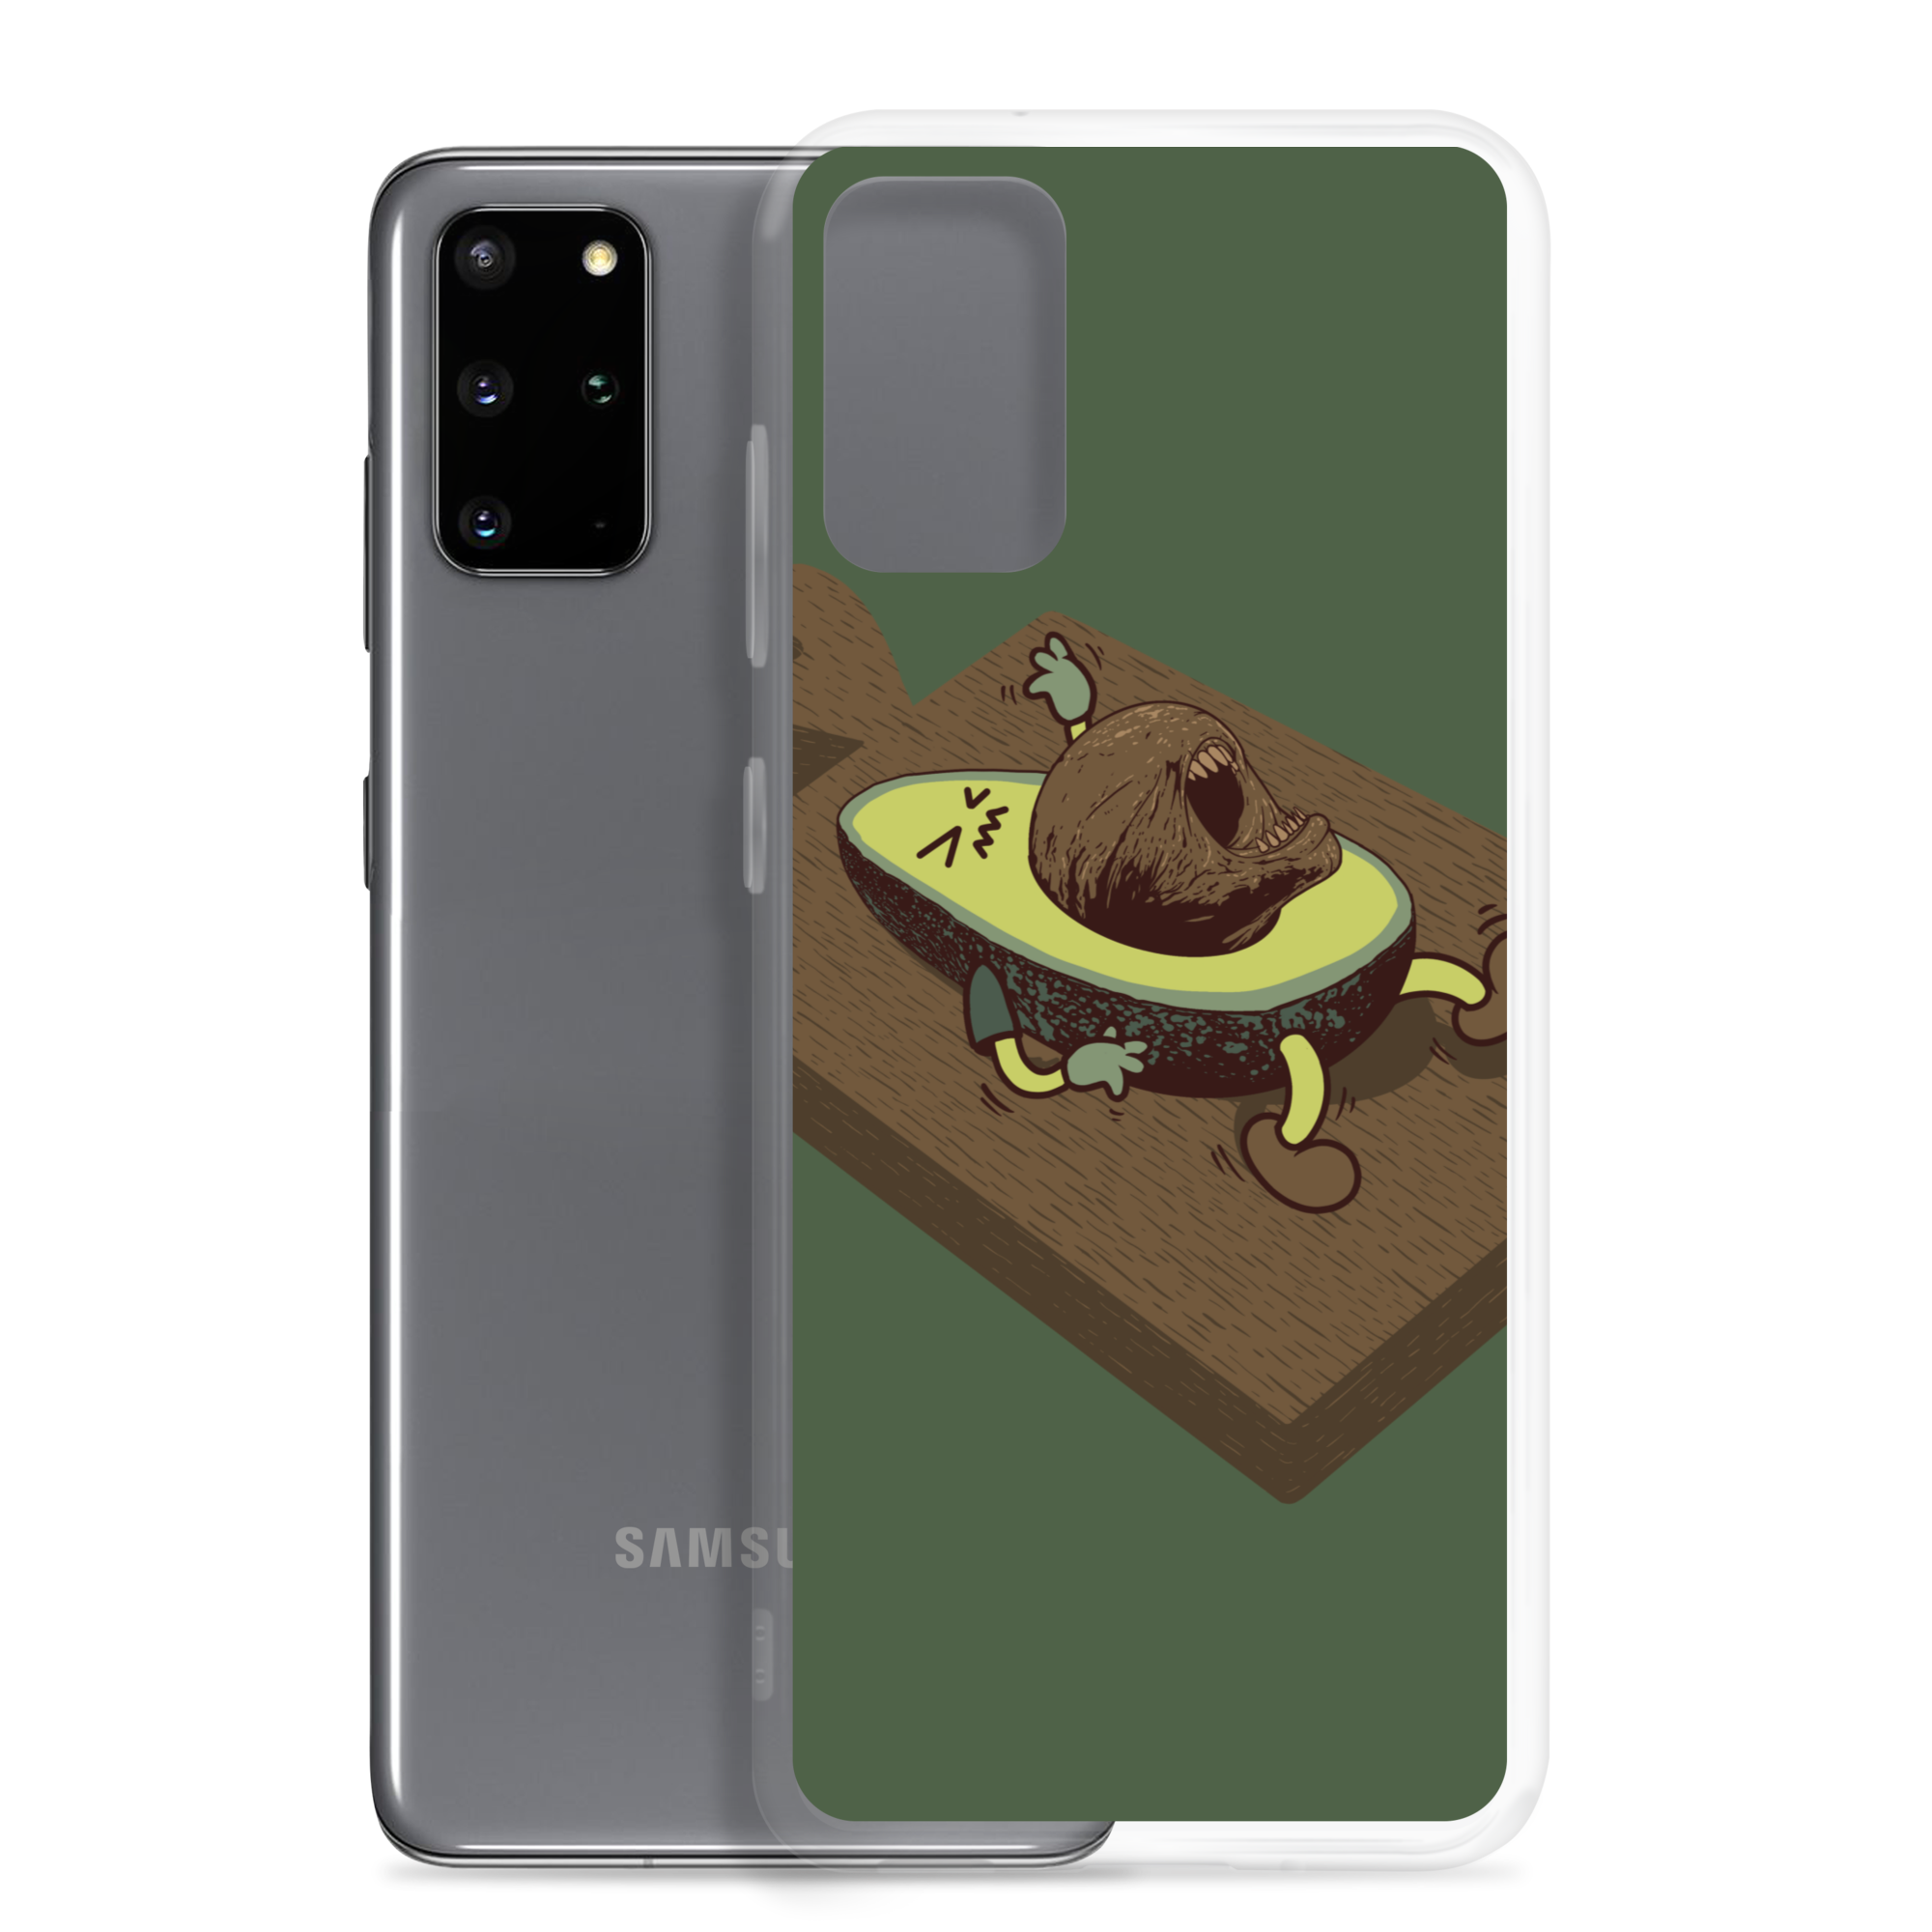 Carcasa transparente Samsung® Palta vs Alien